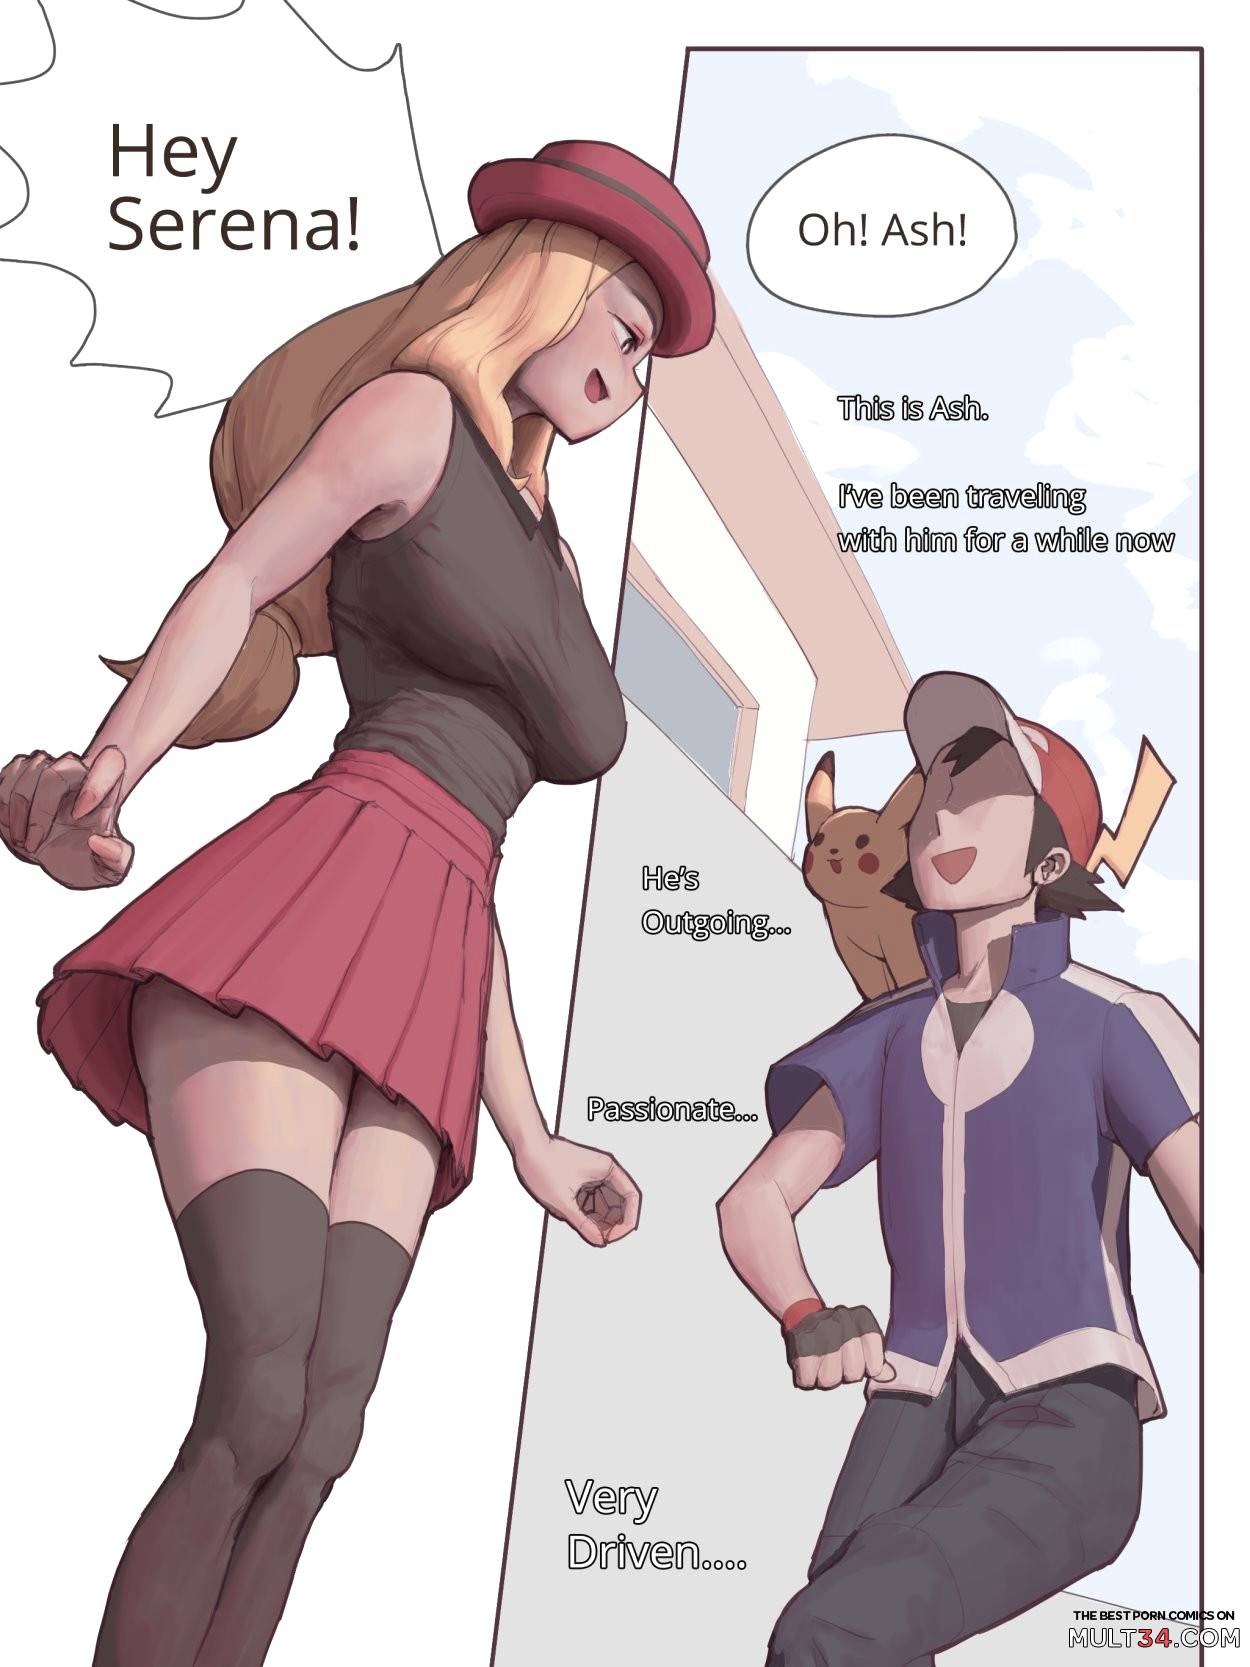 Serena pokemon porn